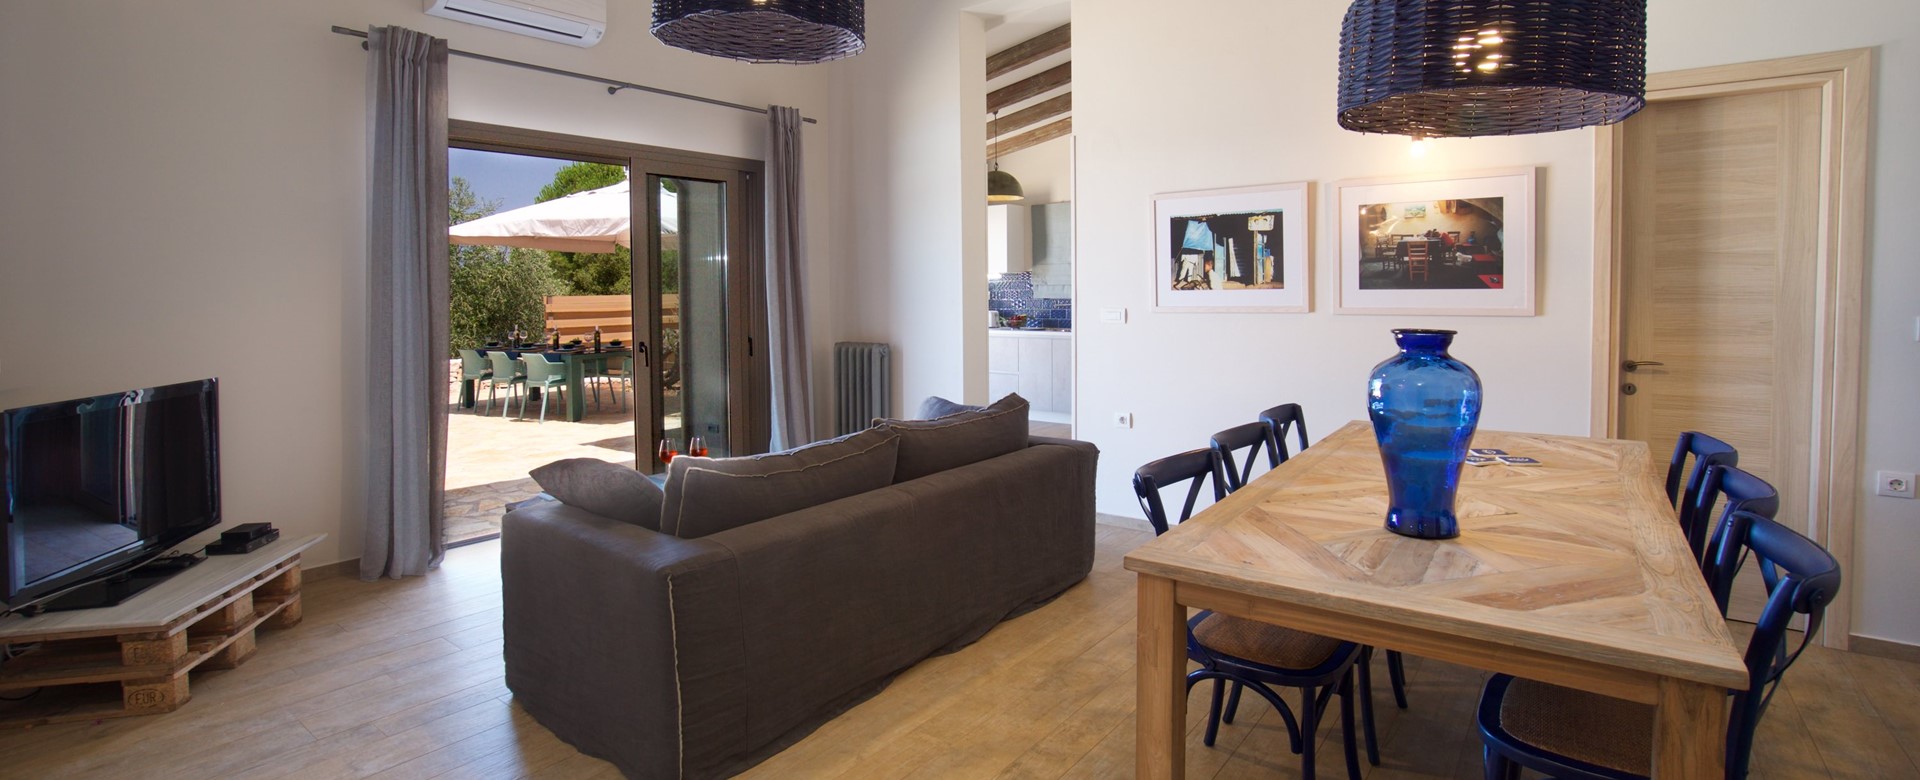 Lounge and dining space inside Villa Frydi, Karavomilos, Kefalonia, Greek Islands